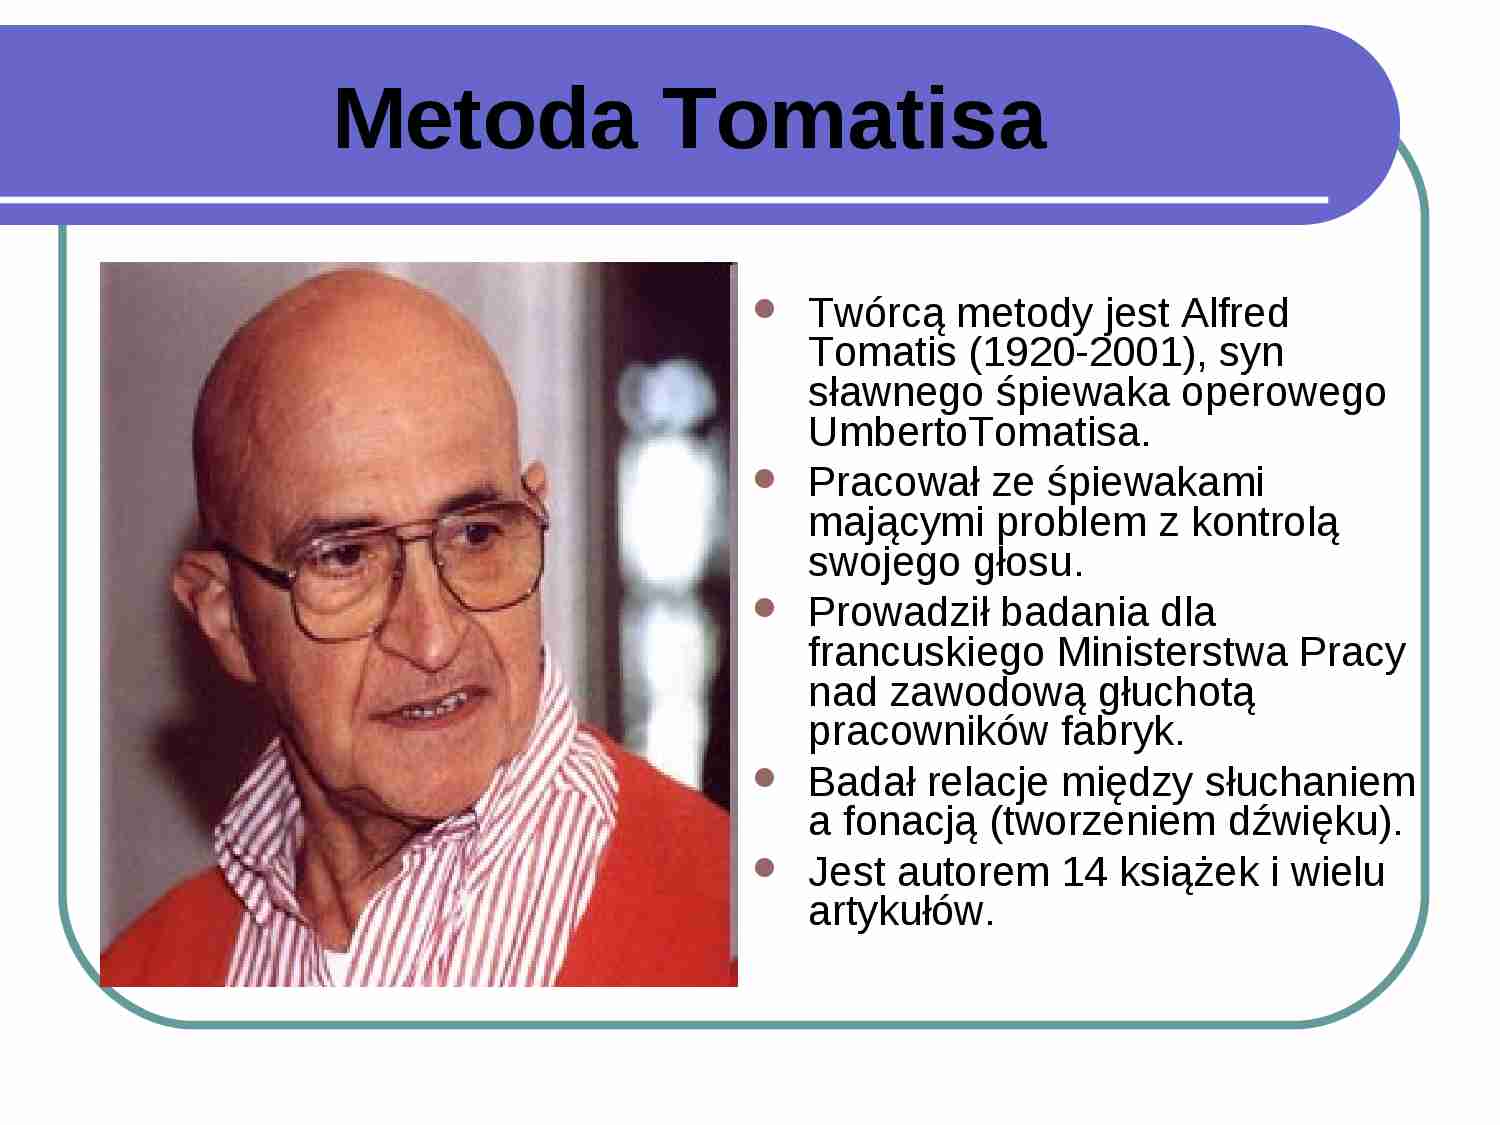 Metoda Tomatisa - strona 1